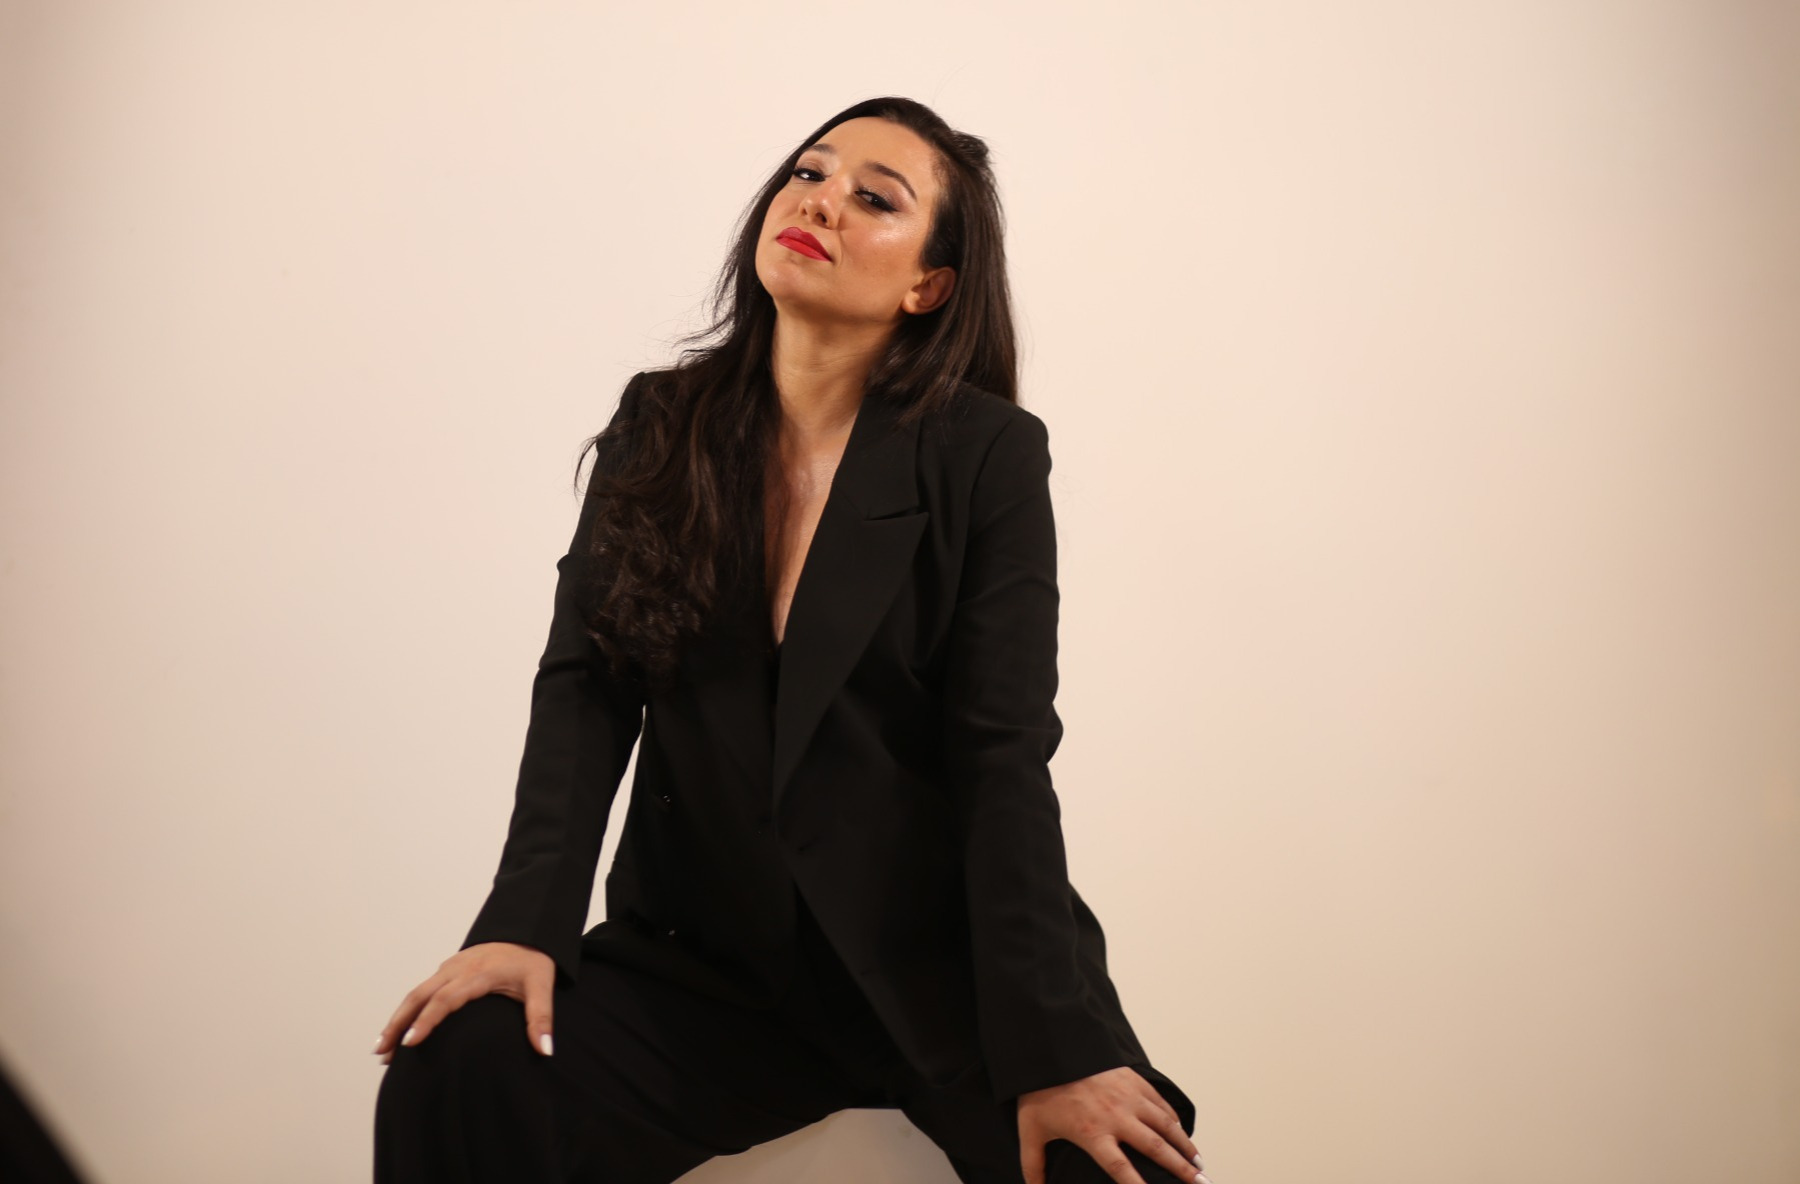 PBLA Alumni Spotlight: Composer Lily Soloshvili